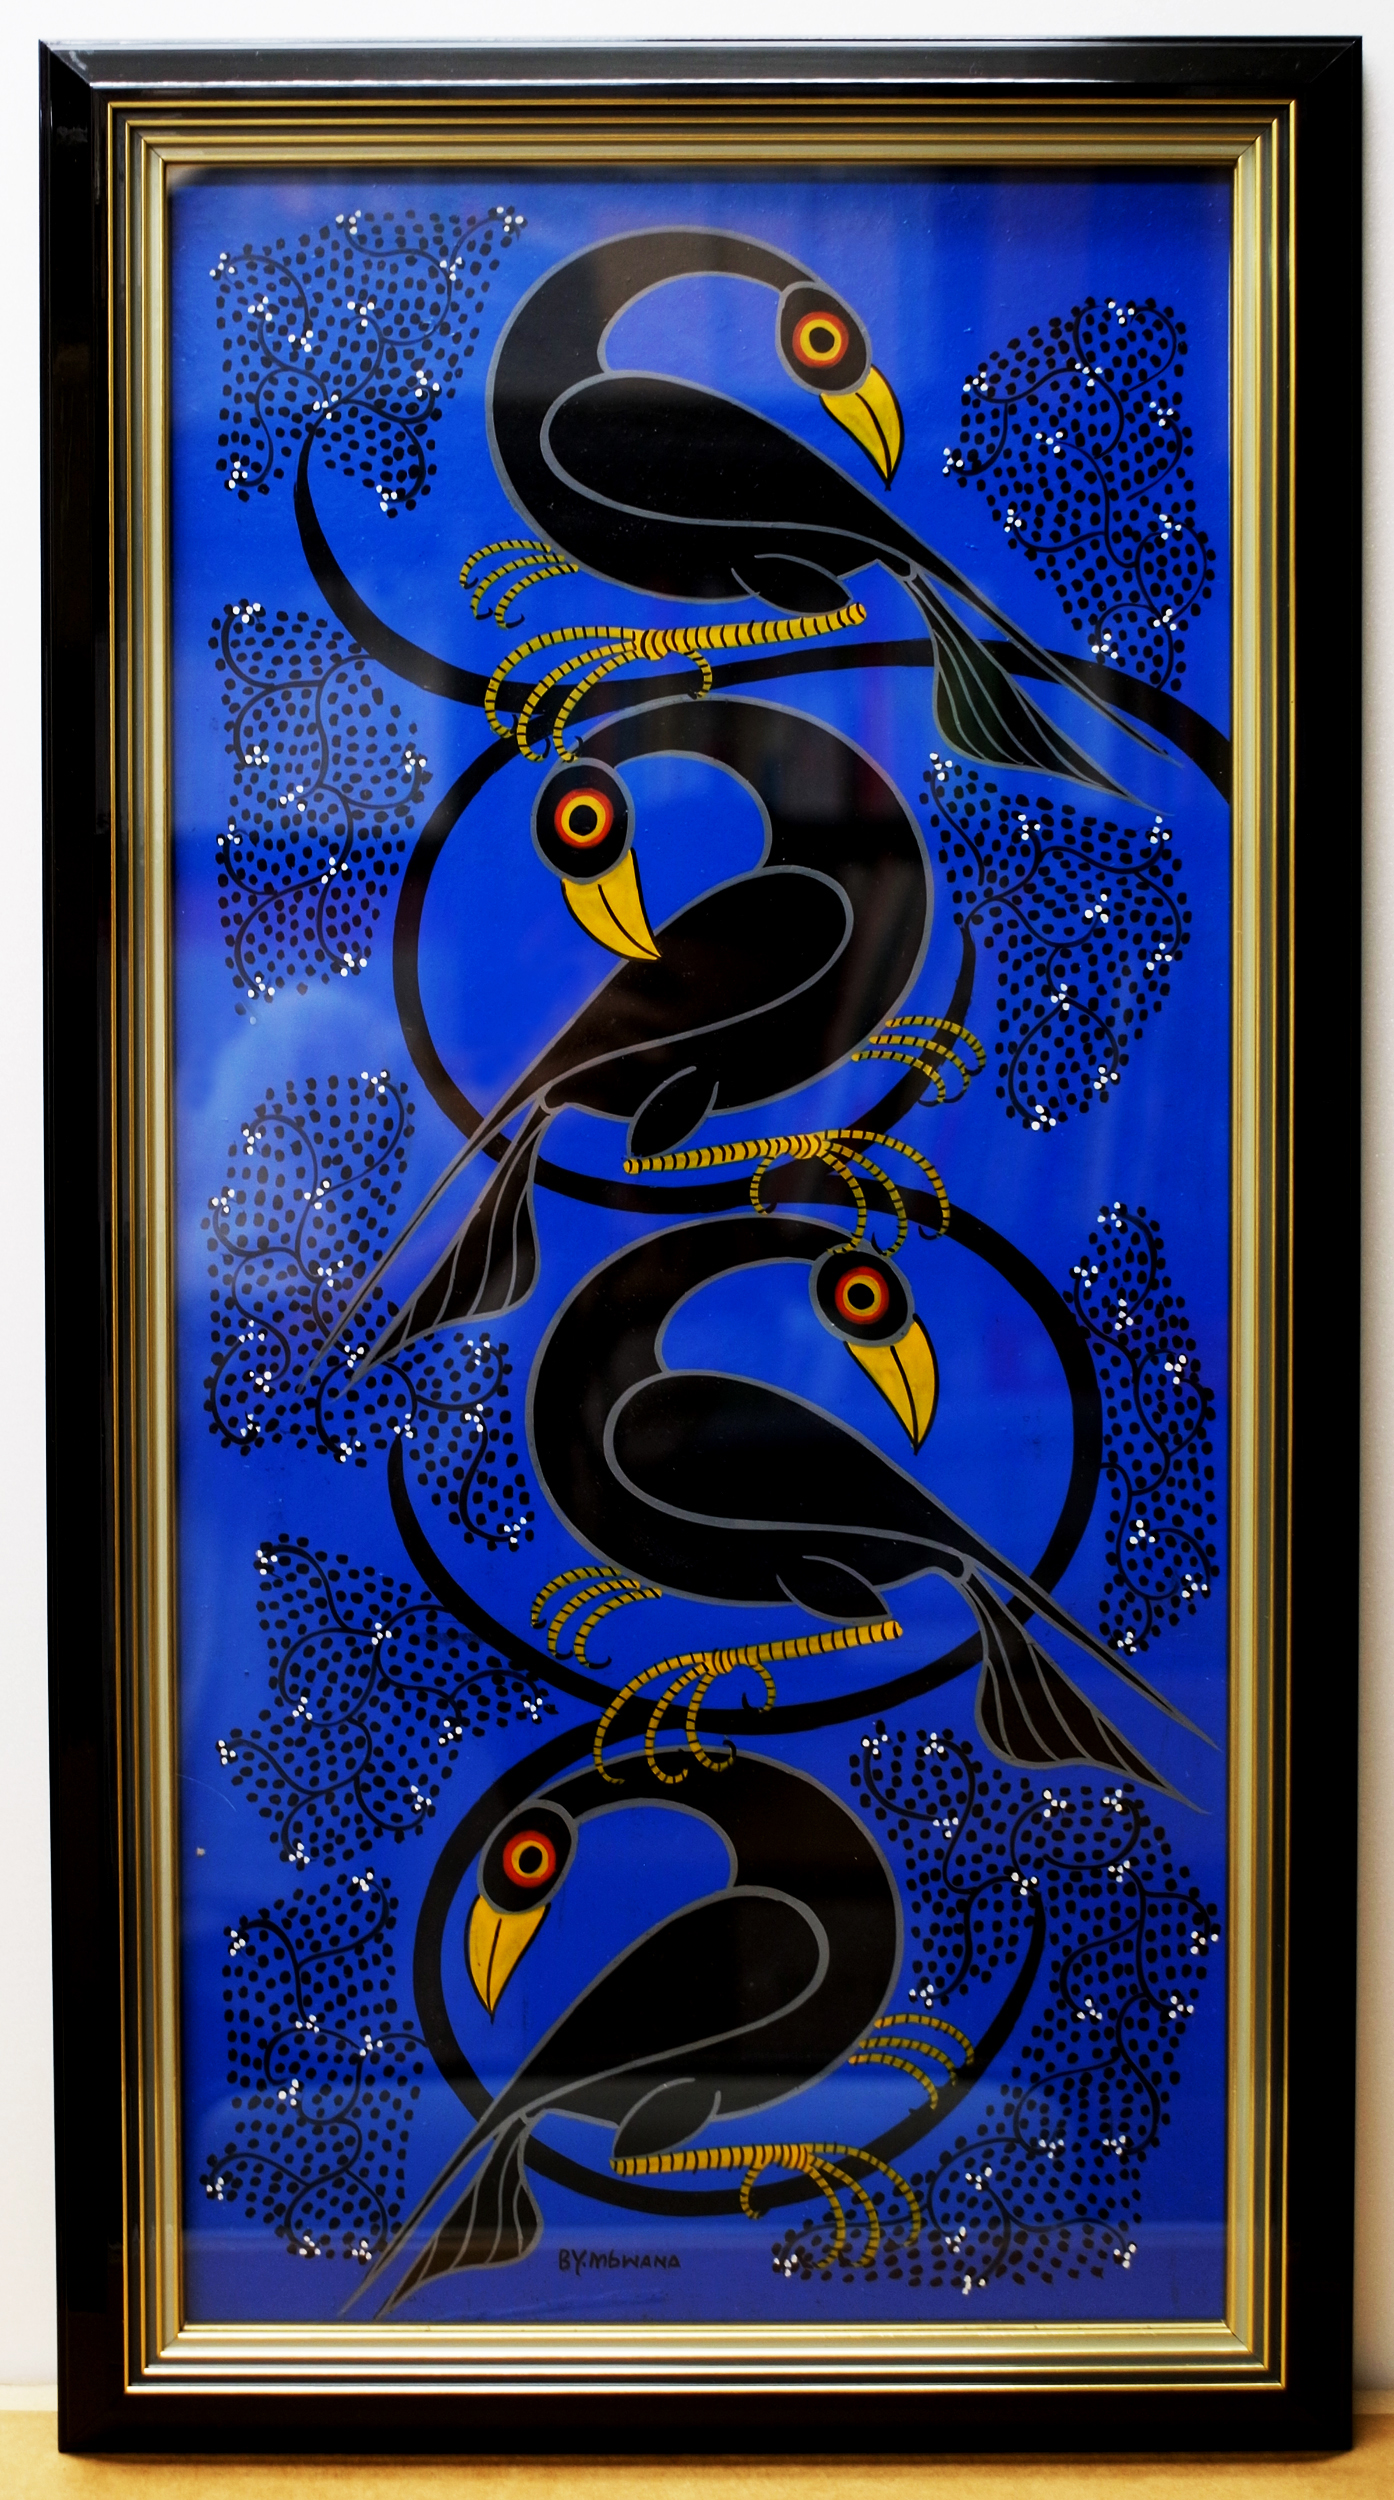 MBWANA SUDI - 4 Birds (600~300 Framed)